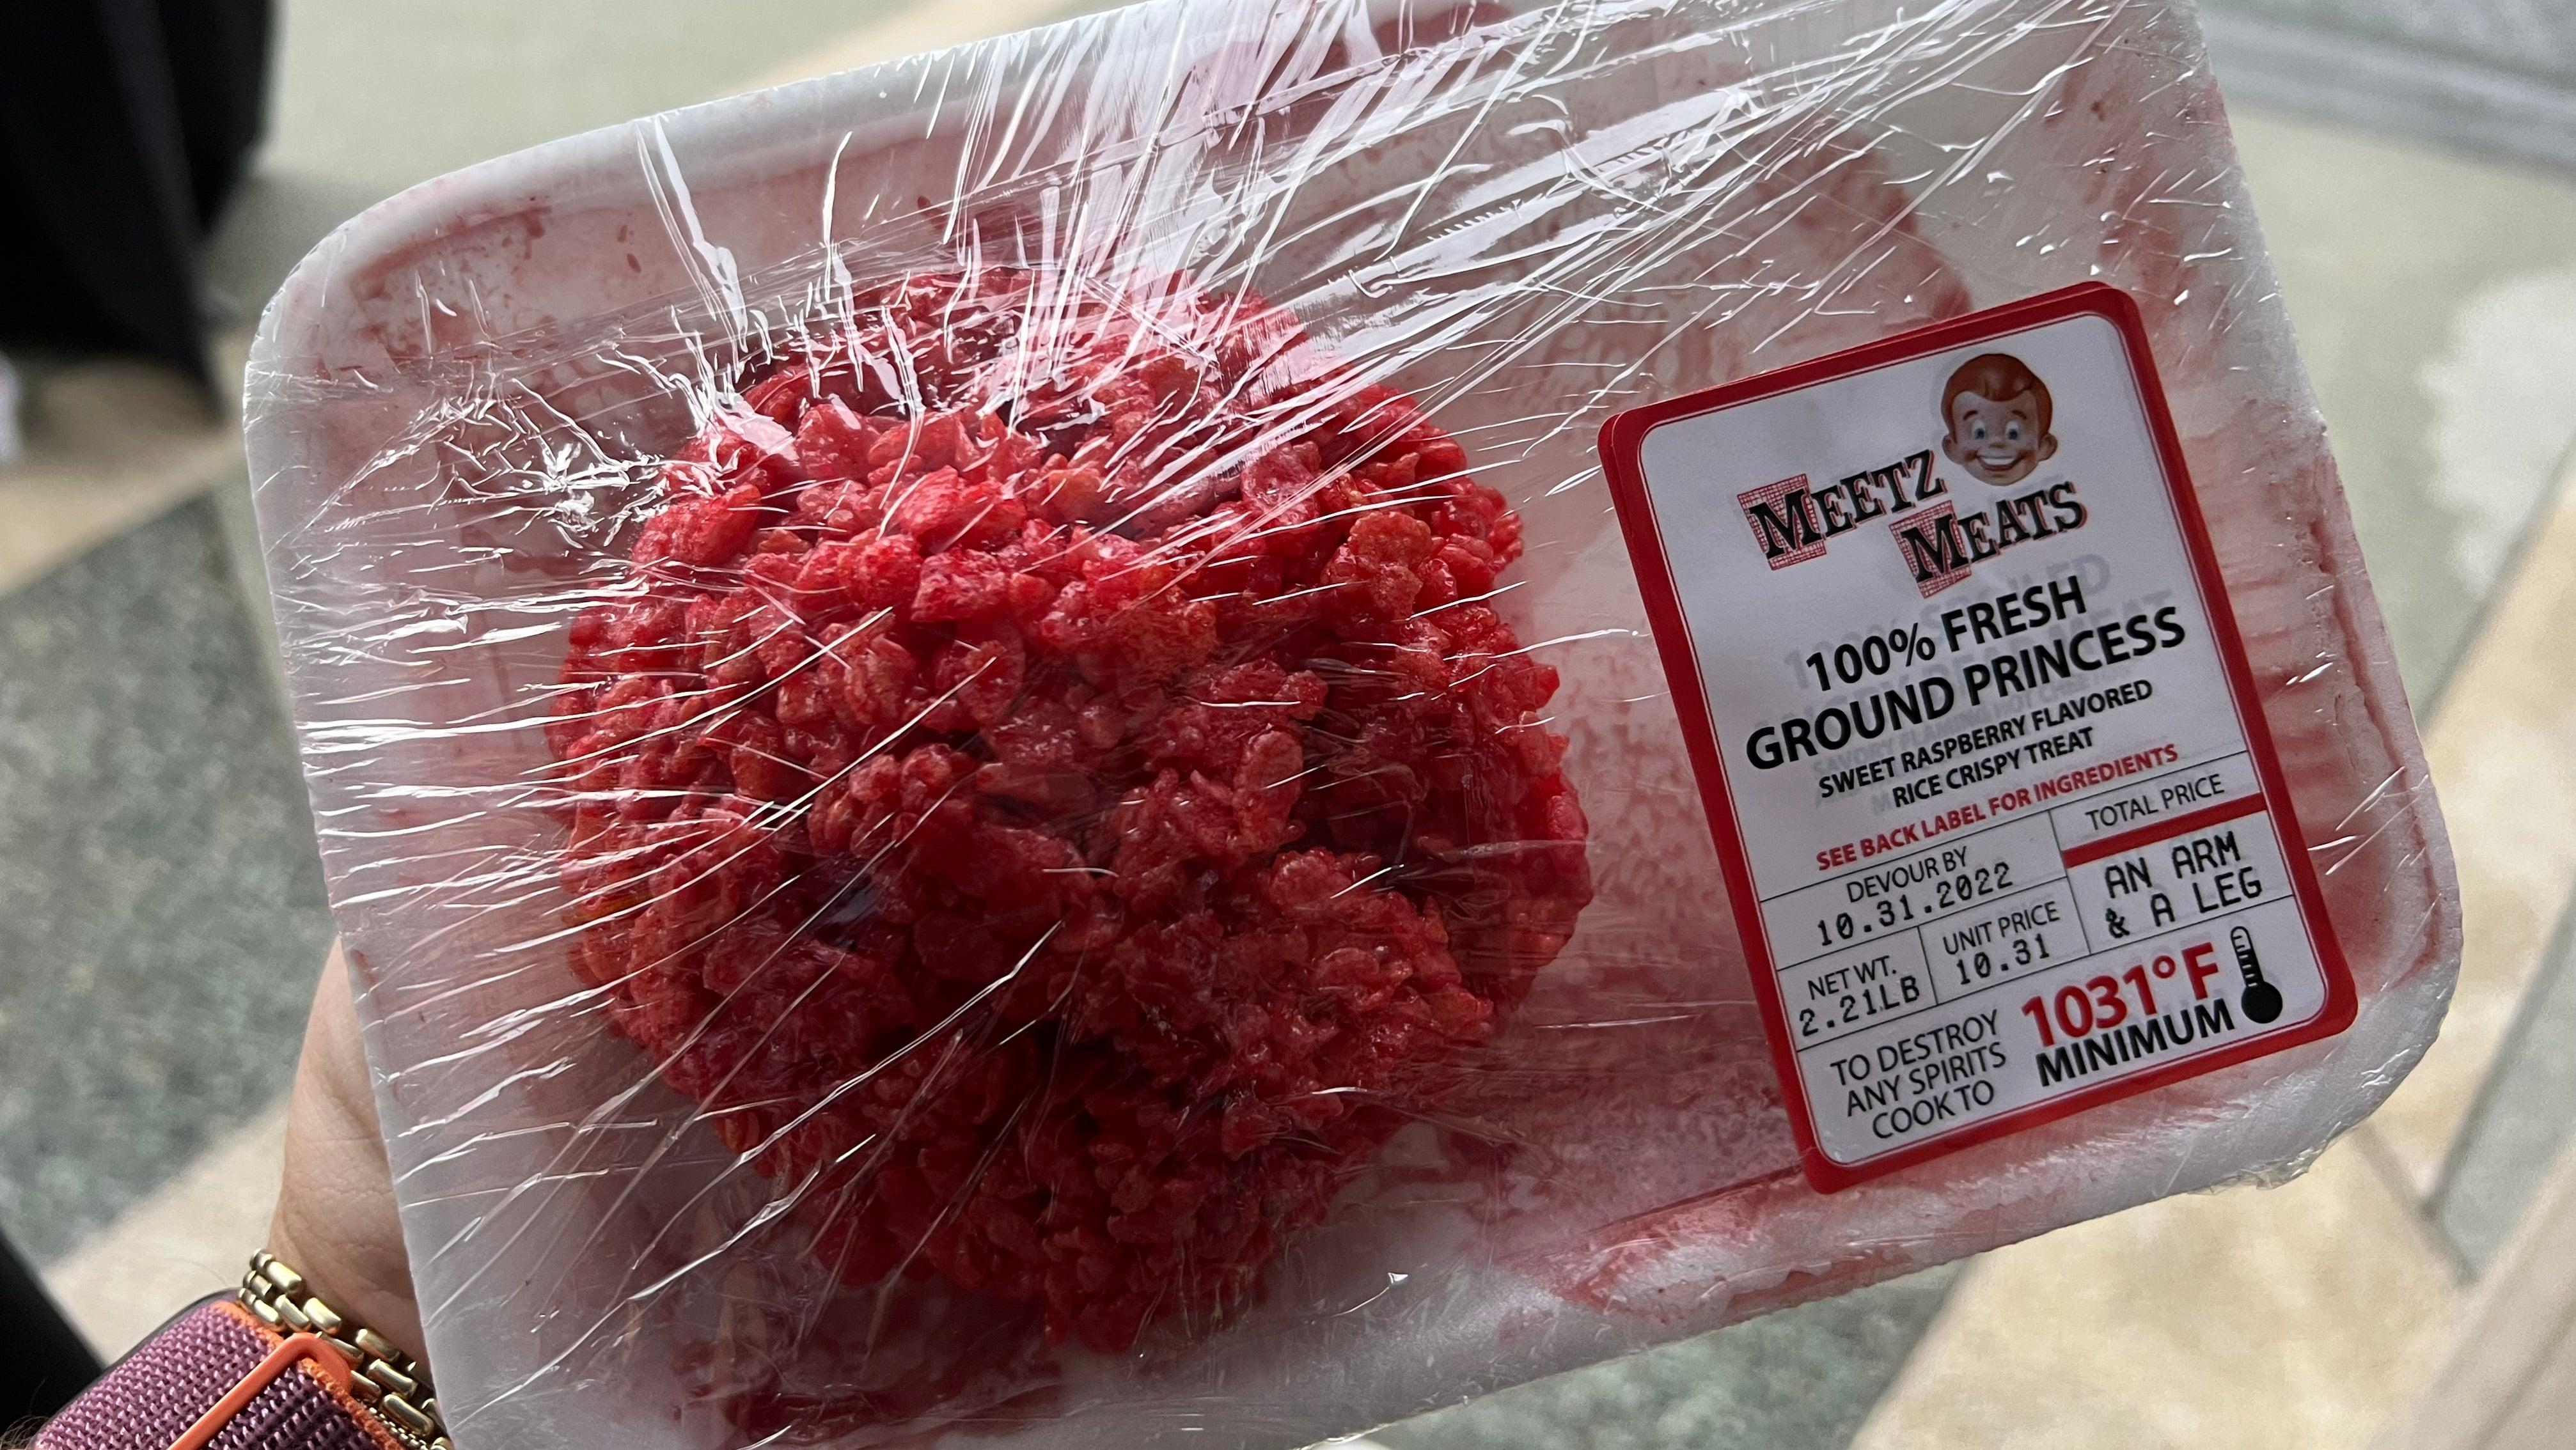 Meetz Meats 100% Fresh Ground Princess in packaging